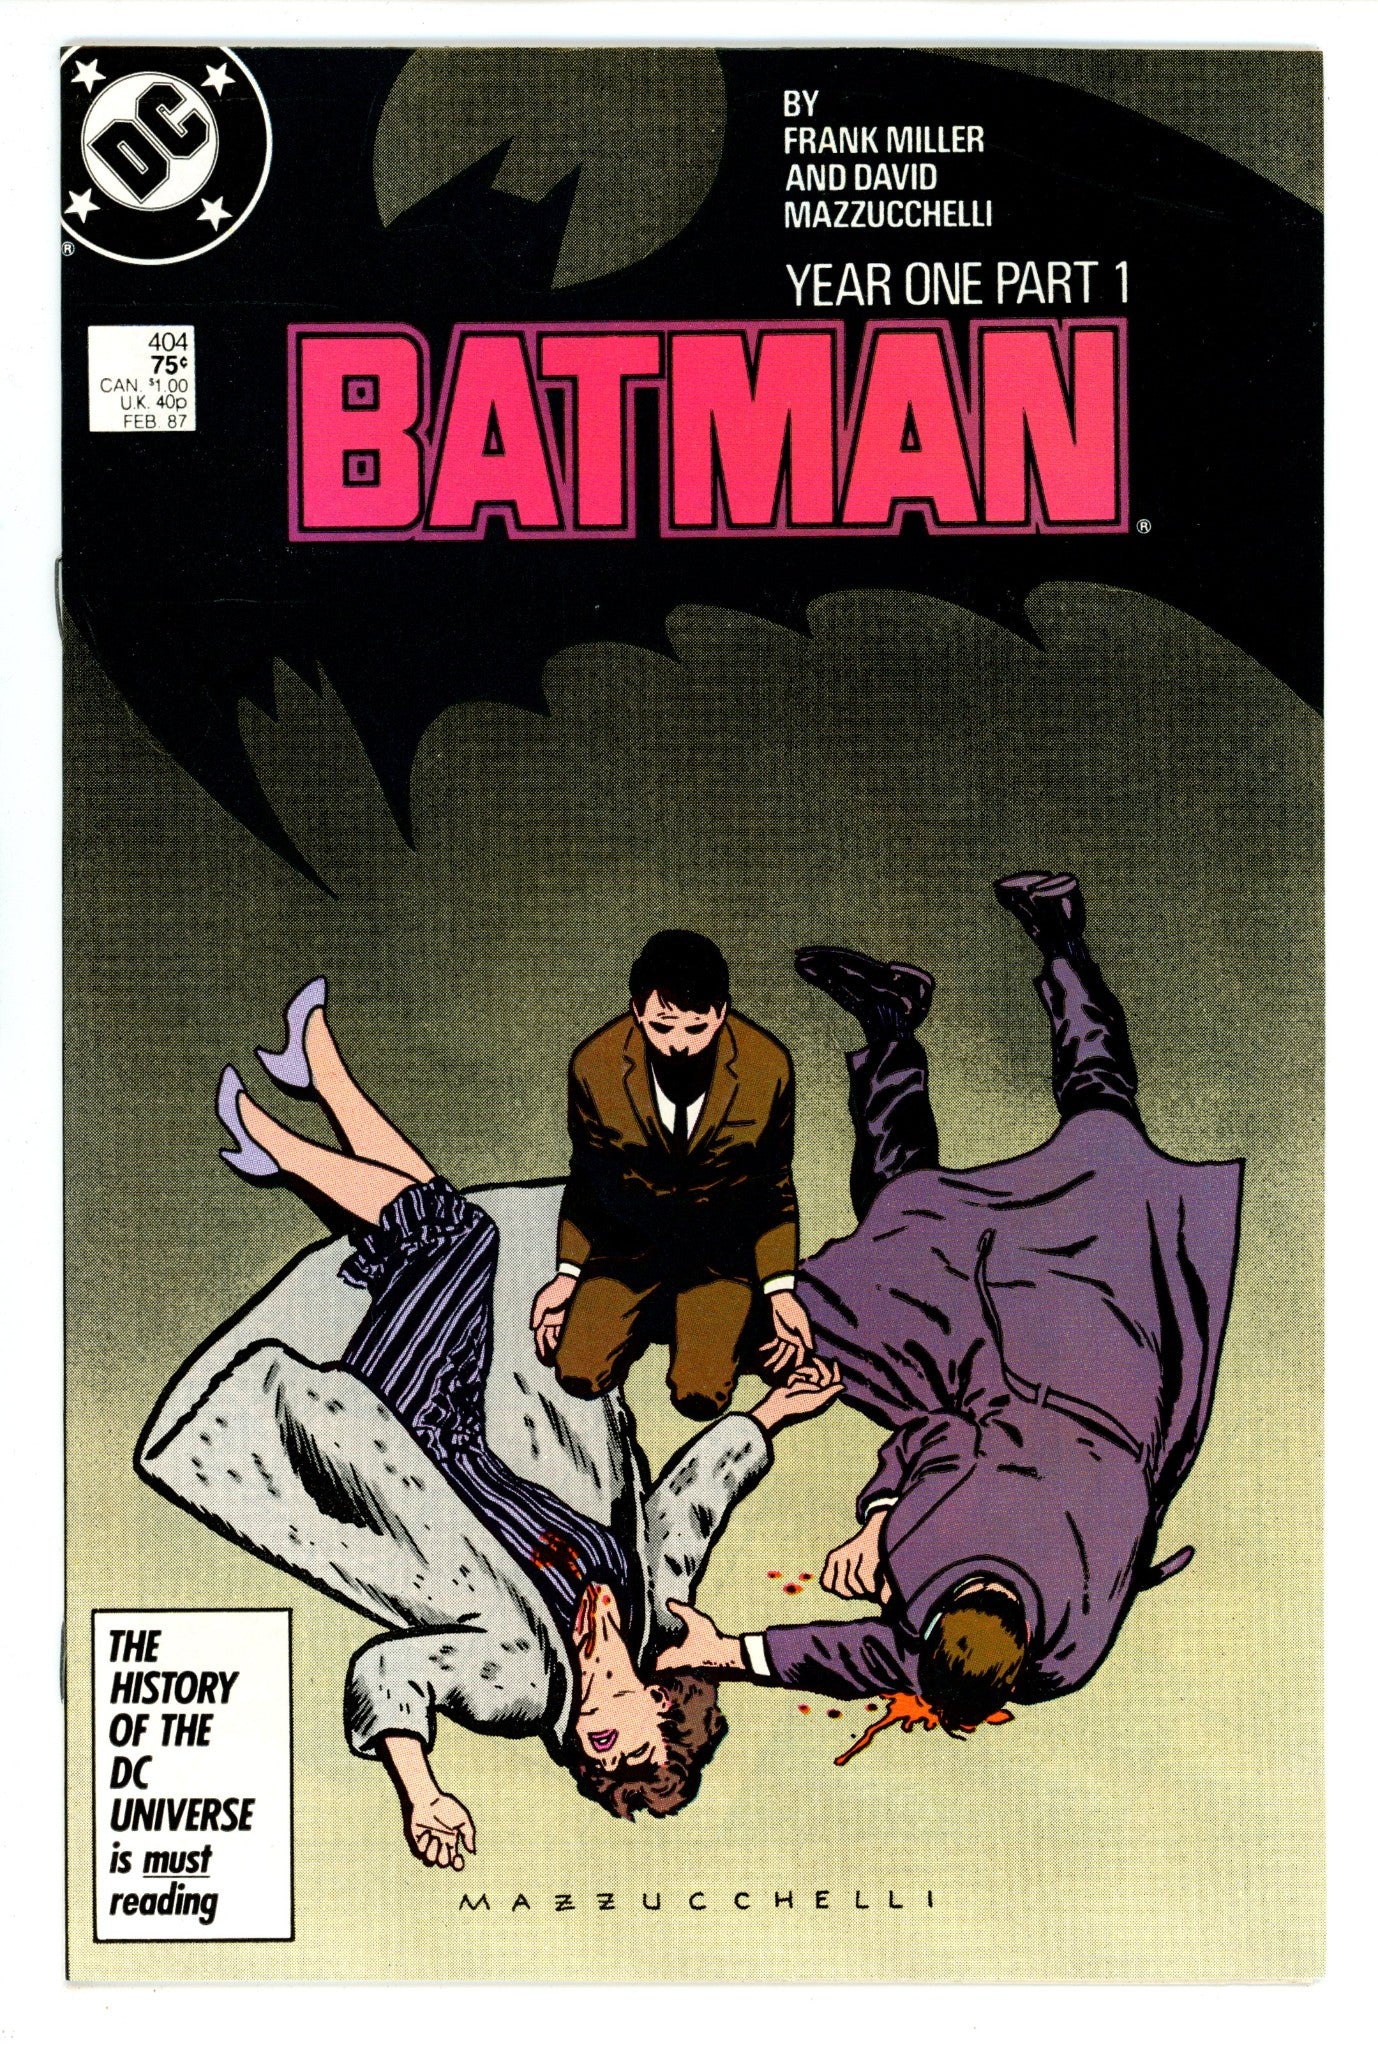 Batman Vol 1 404 VF/NM (9.0) (1987) 